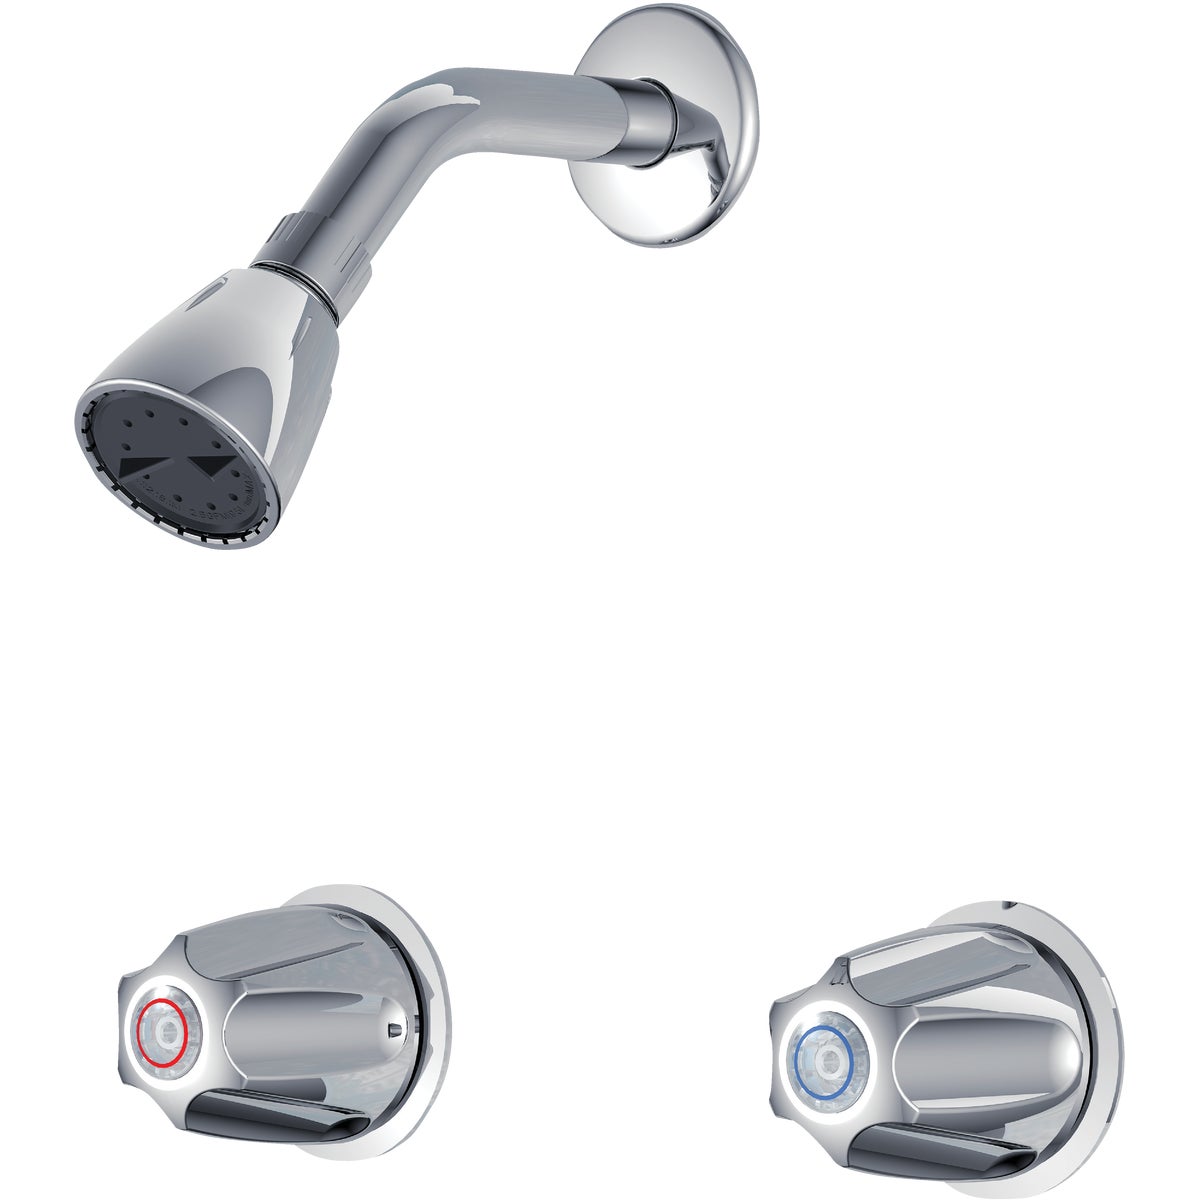 Item 400702, 2-handle metallic shower faucet with metal handles. 2.